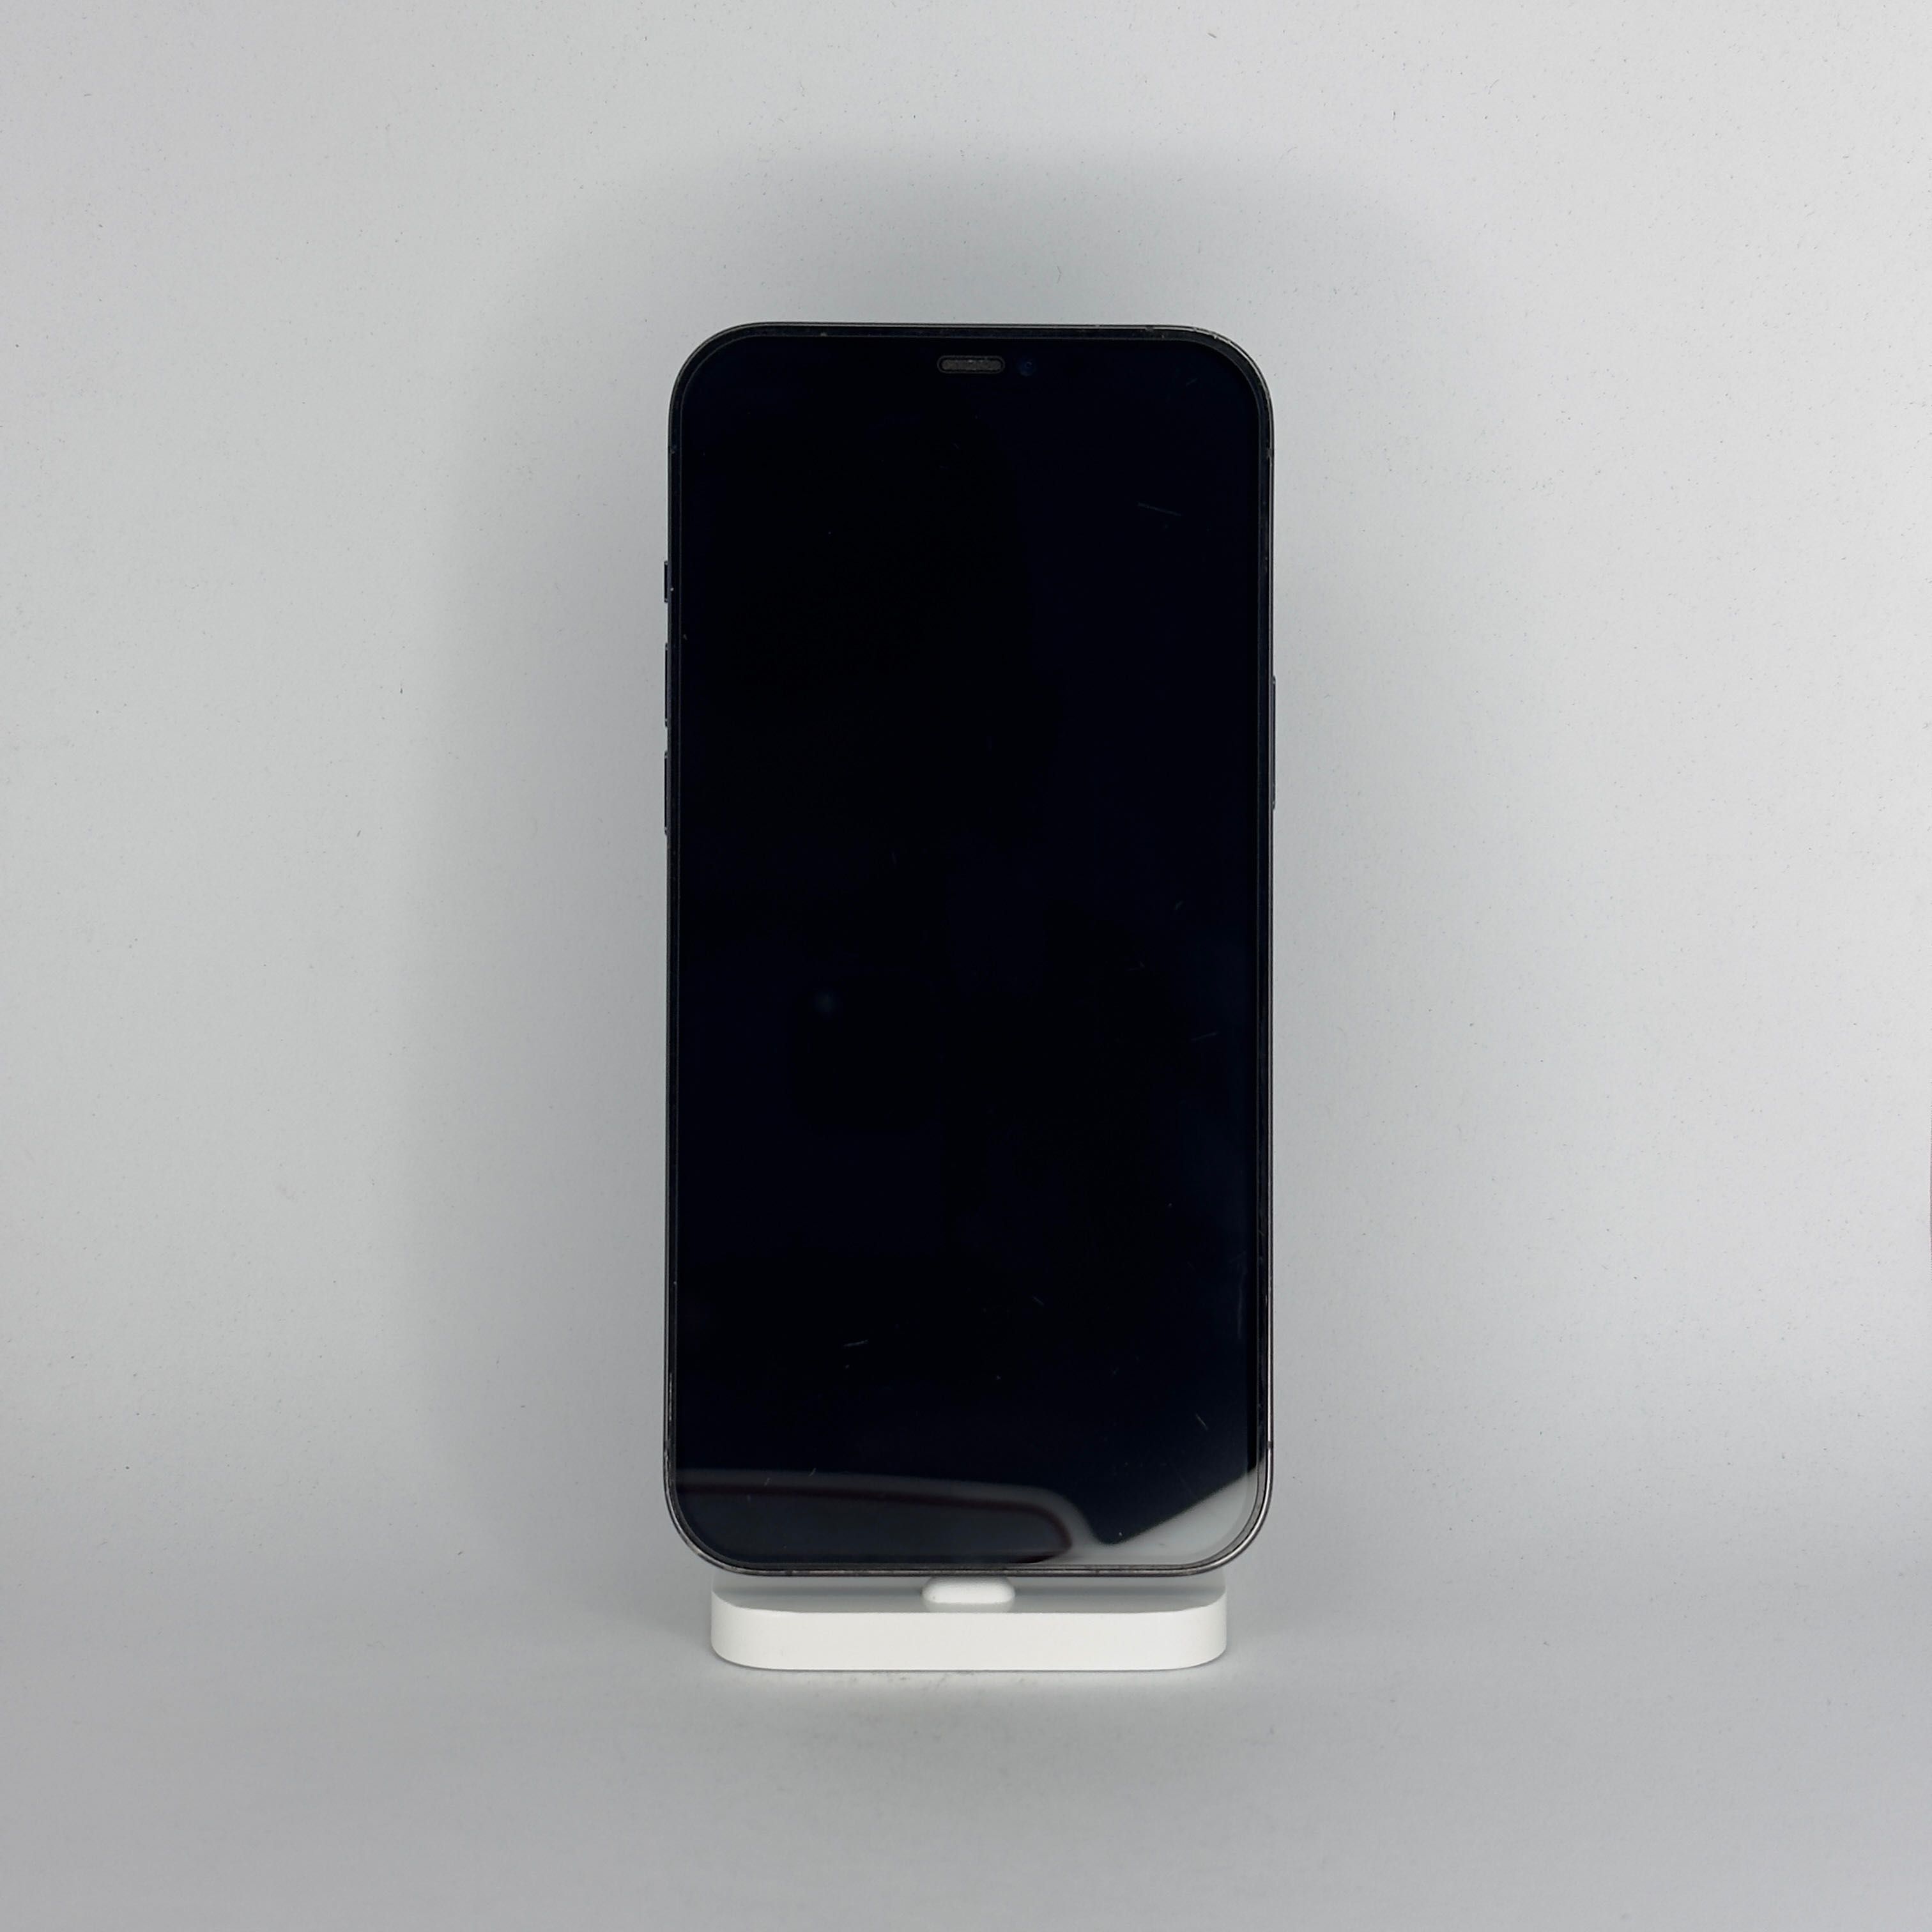 iPhone 12 Pro Max 100% + 24 Luni Garanție / Apple Plug